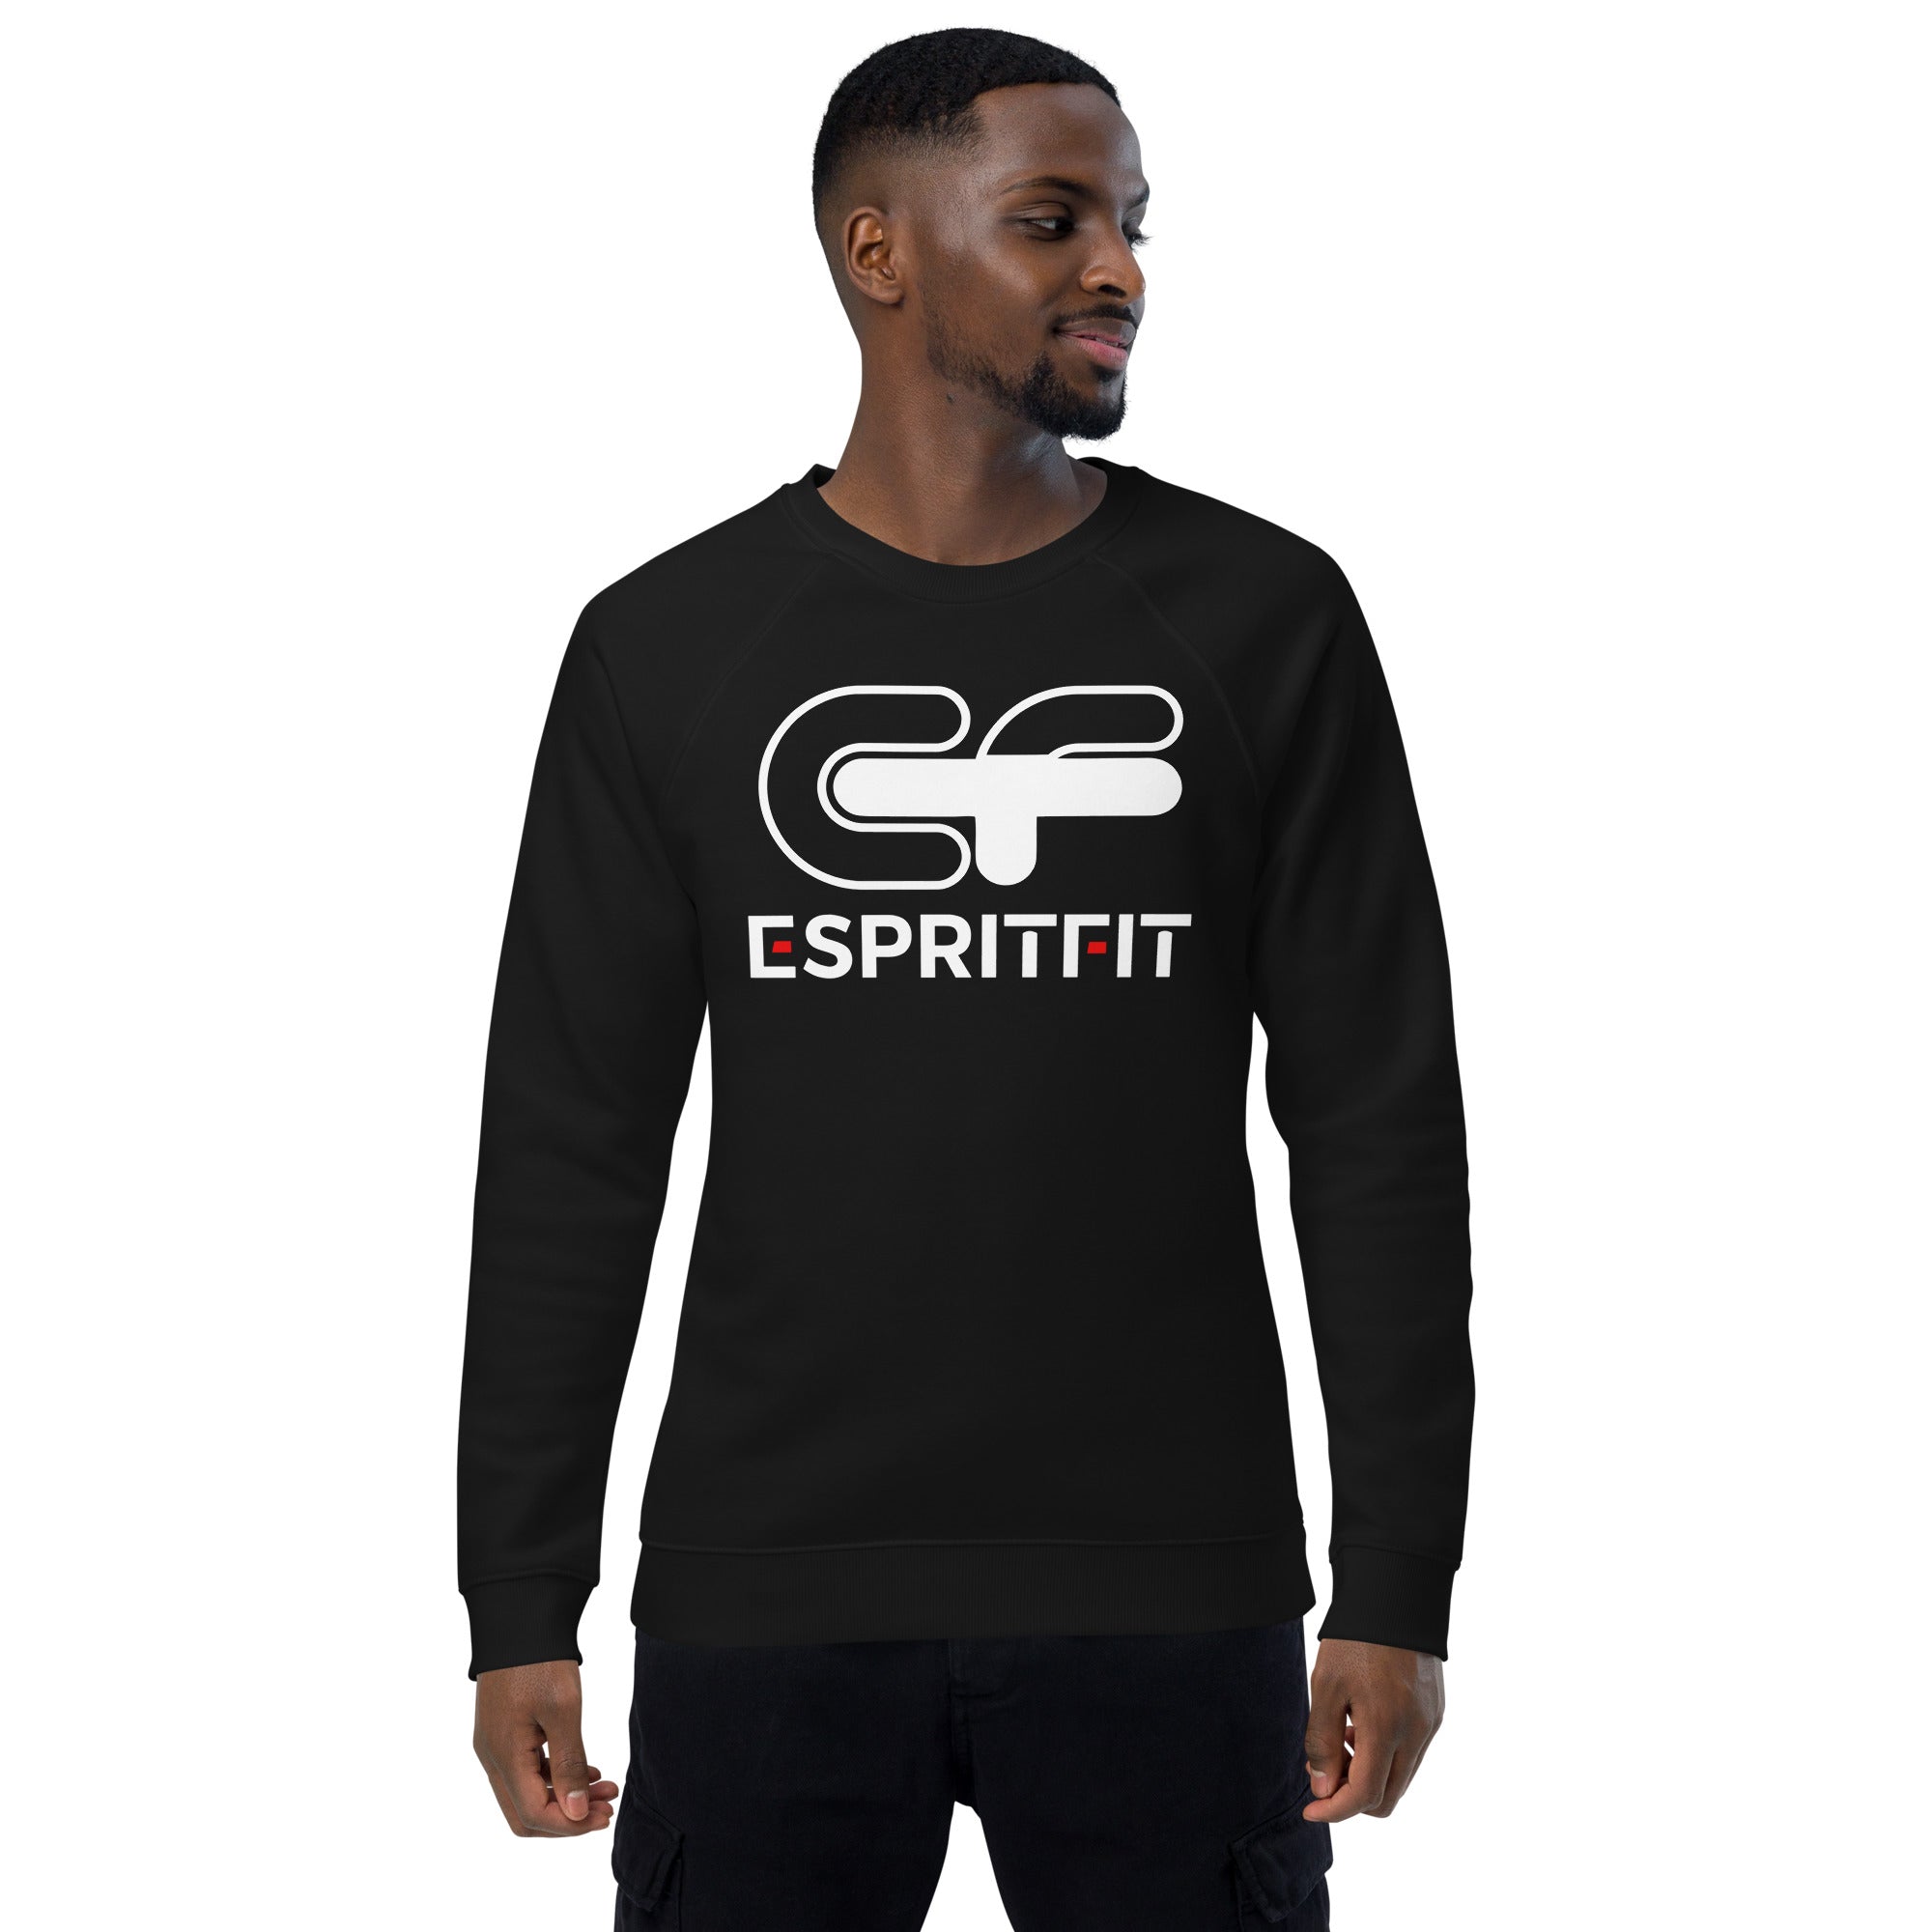 Espritfit Organic Cotton Sweatshirt - Espritfit